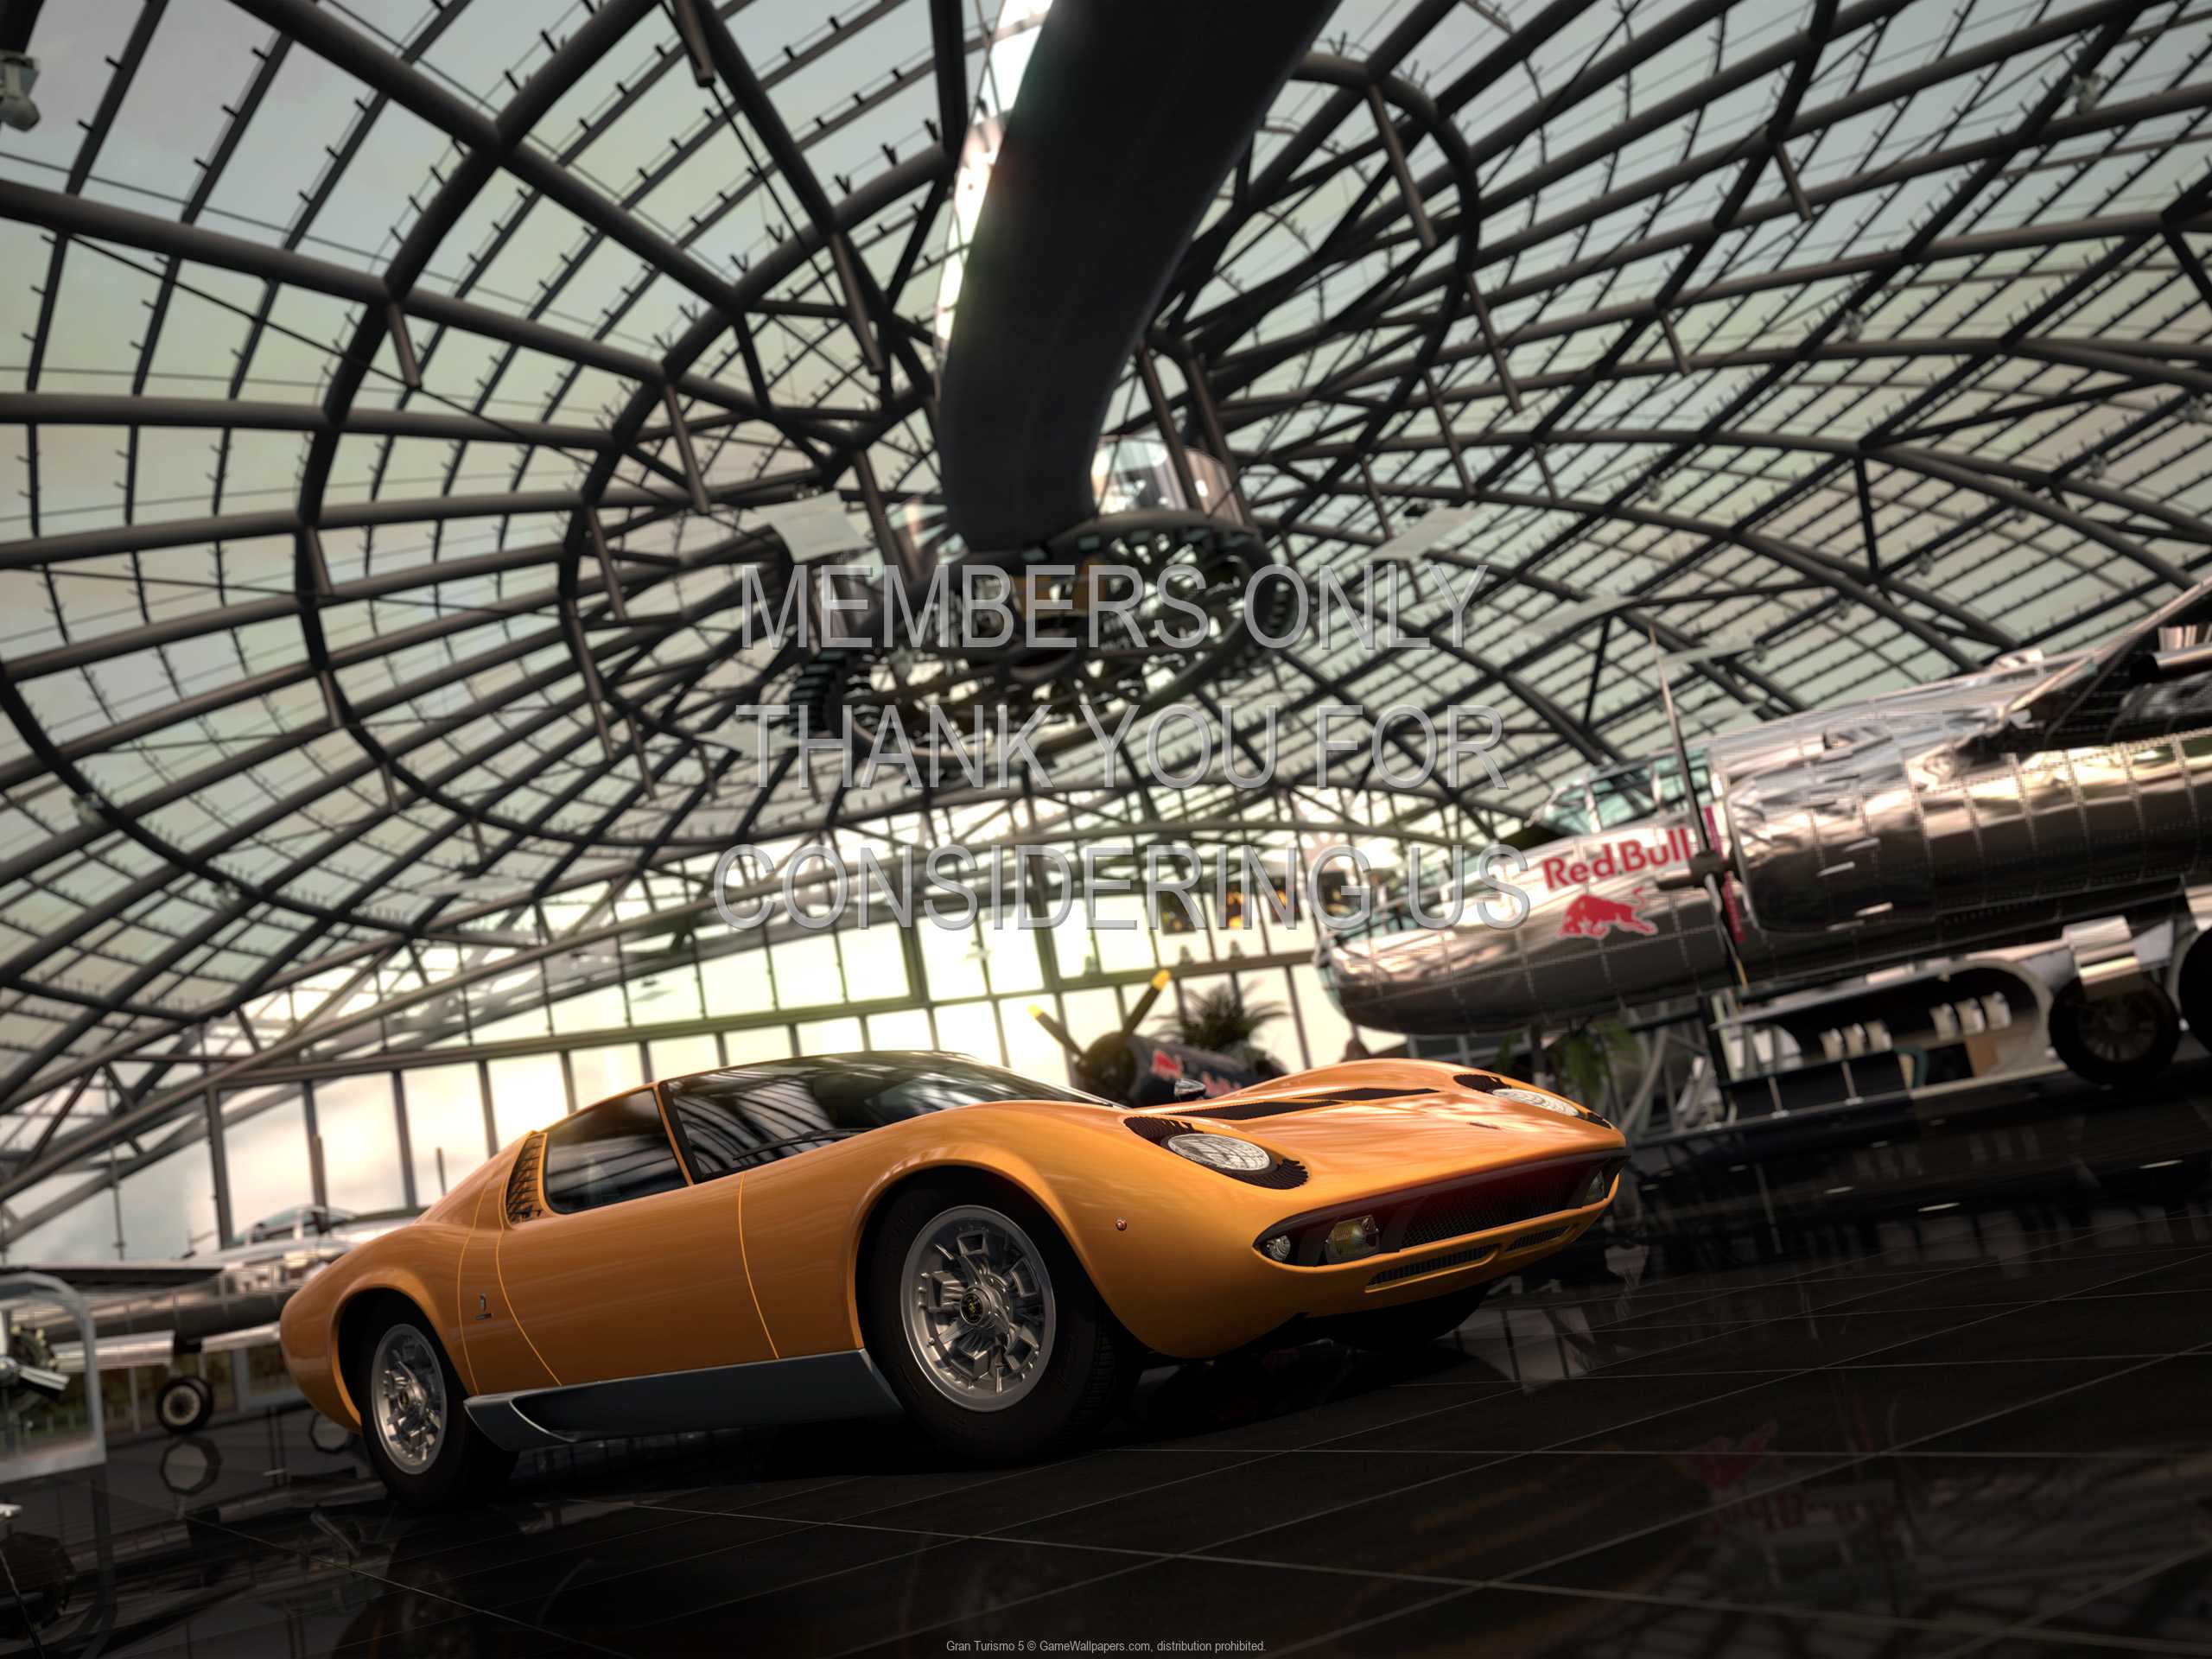 Gran Turismo 5 1080p Horizontal Mobile wallpaper or background 26